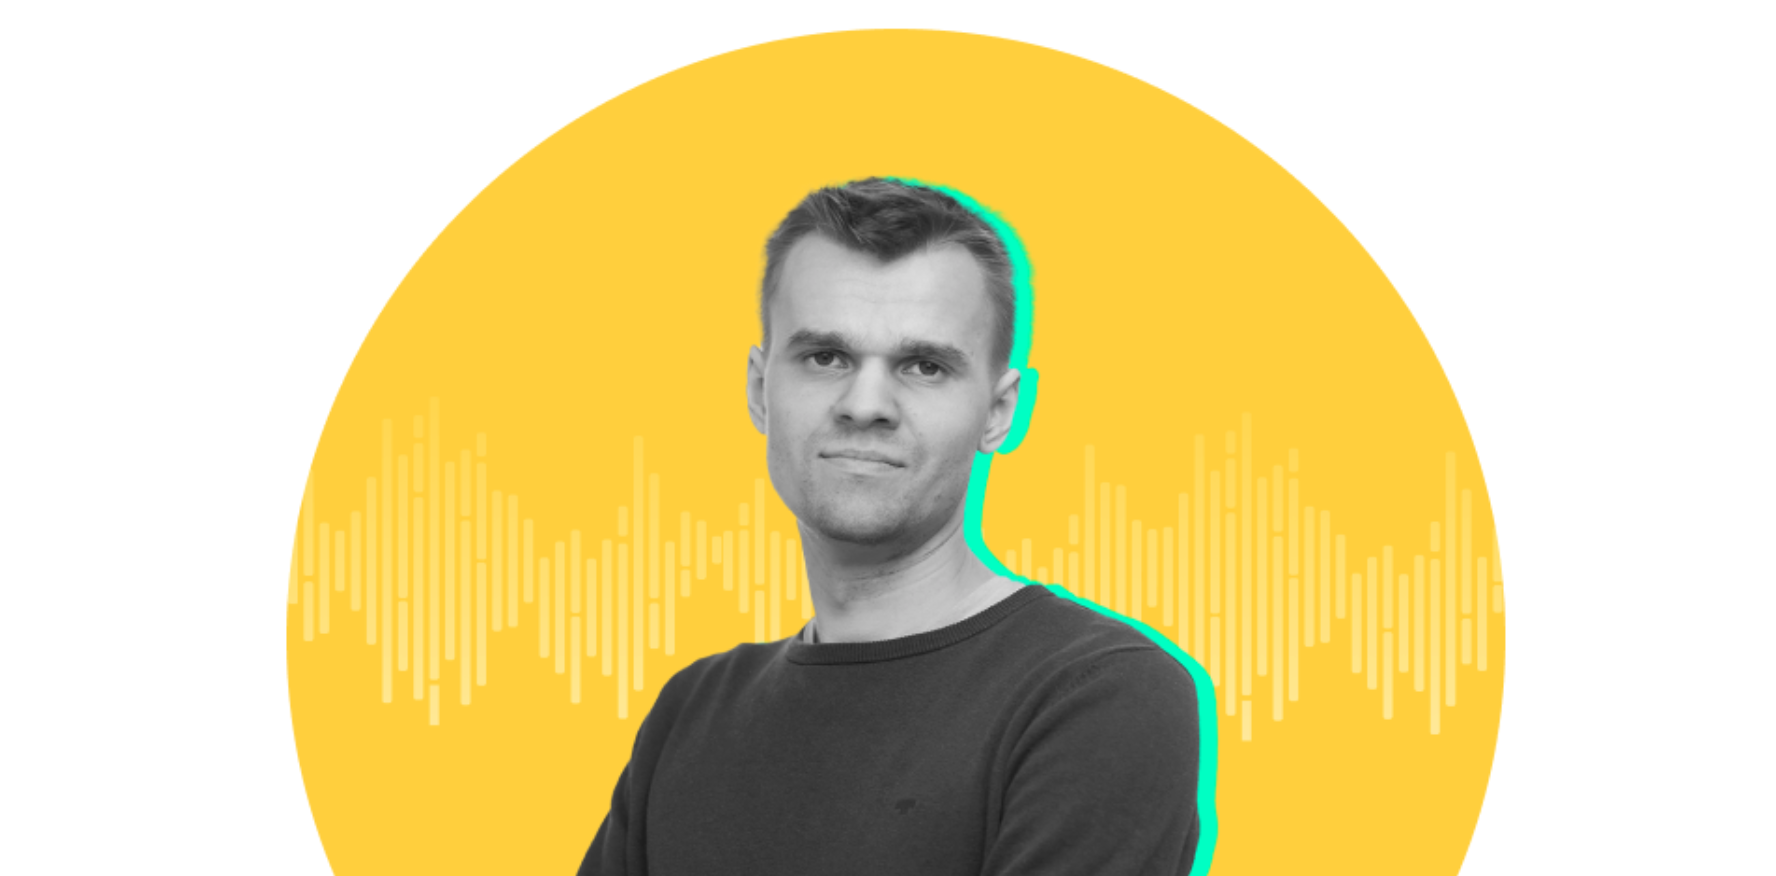 Jaan Hendrik Murumets IoT For All podcast